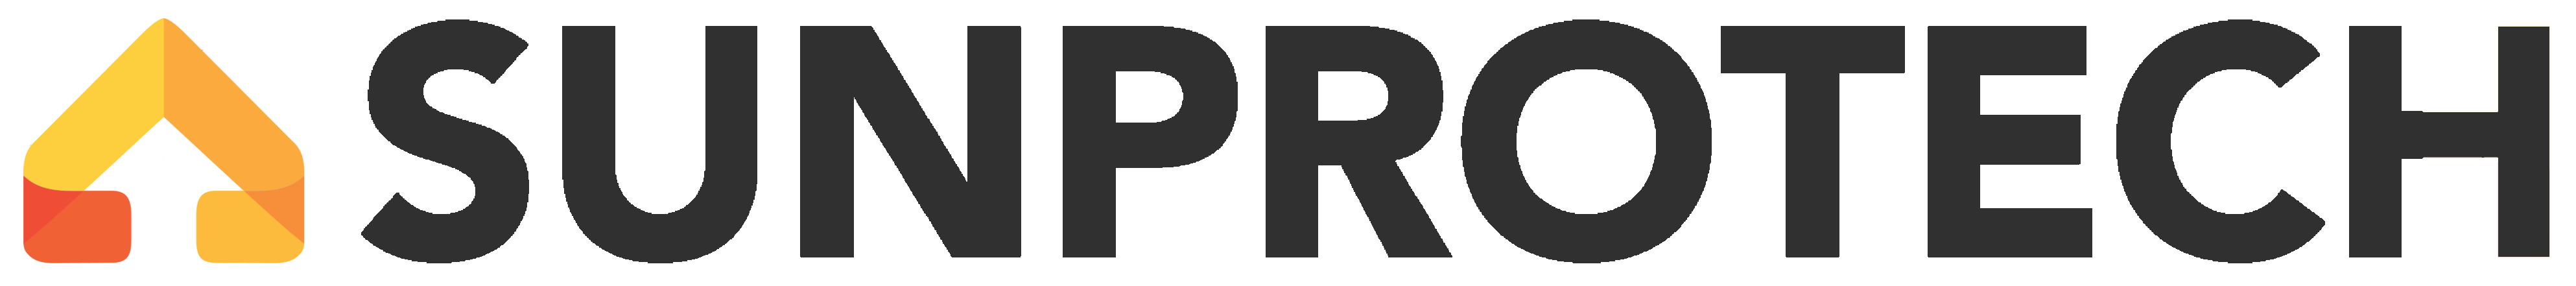 sunprotech-logo-black